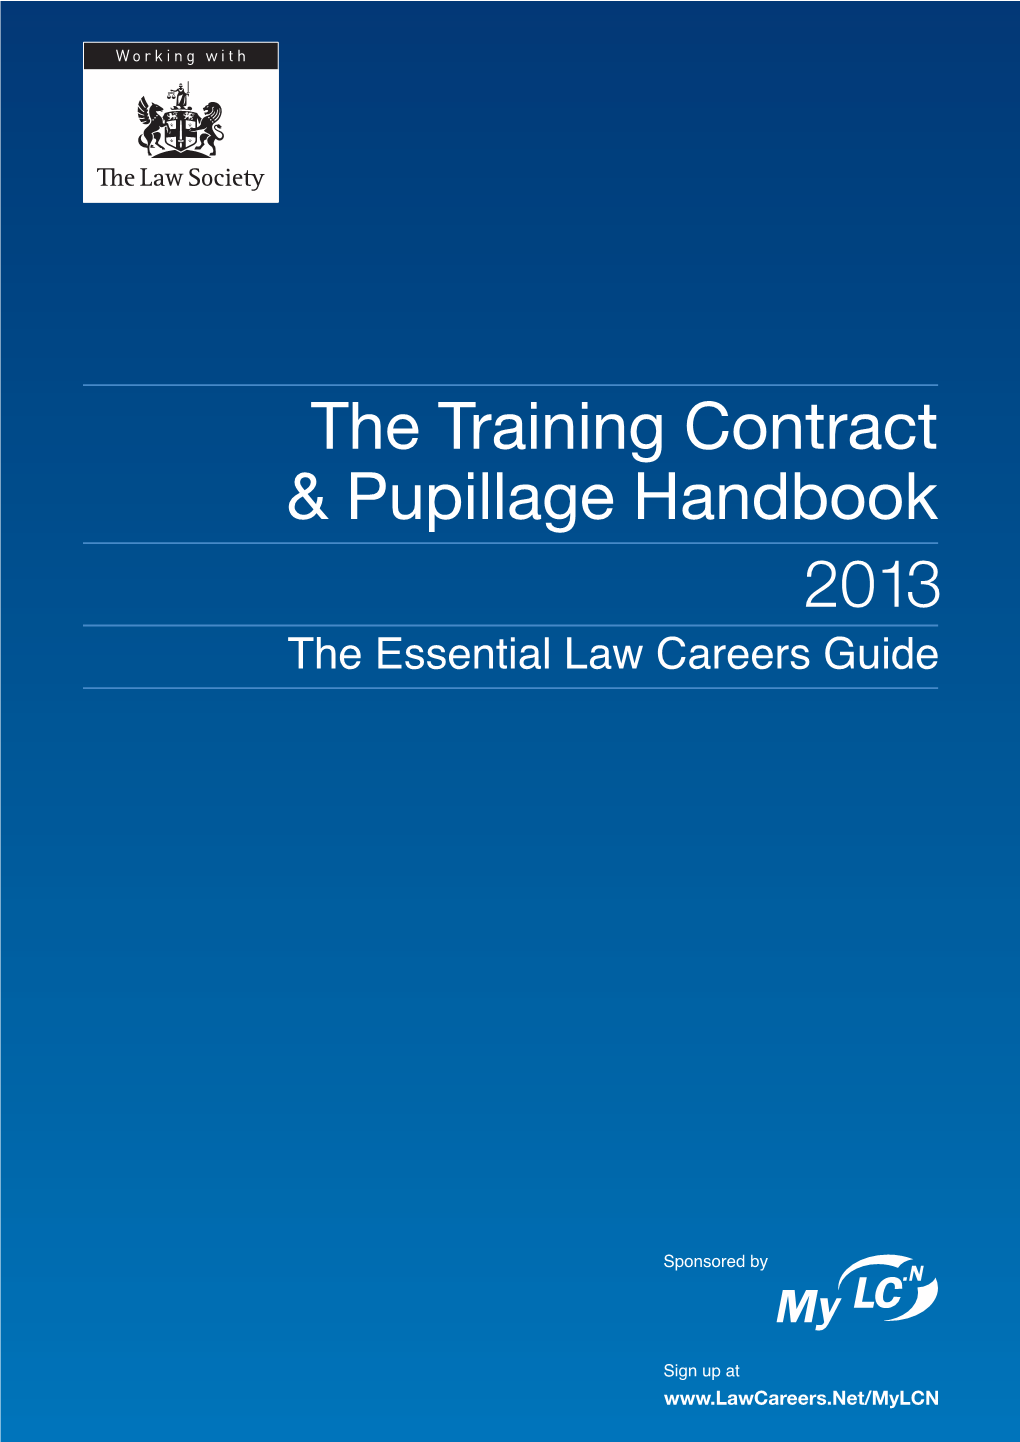 The Training Contract & Pupillage Handbook 2013